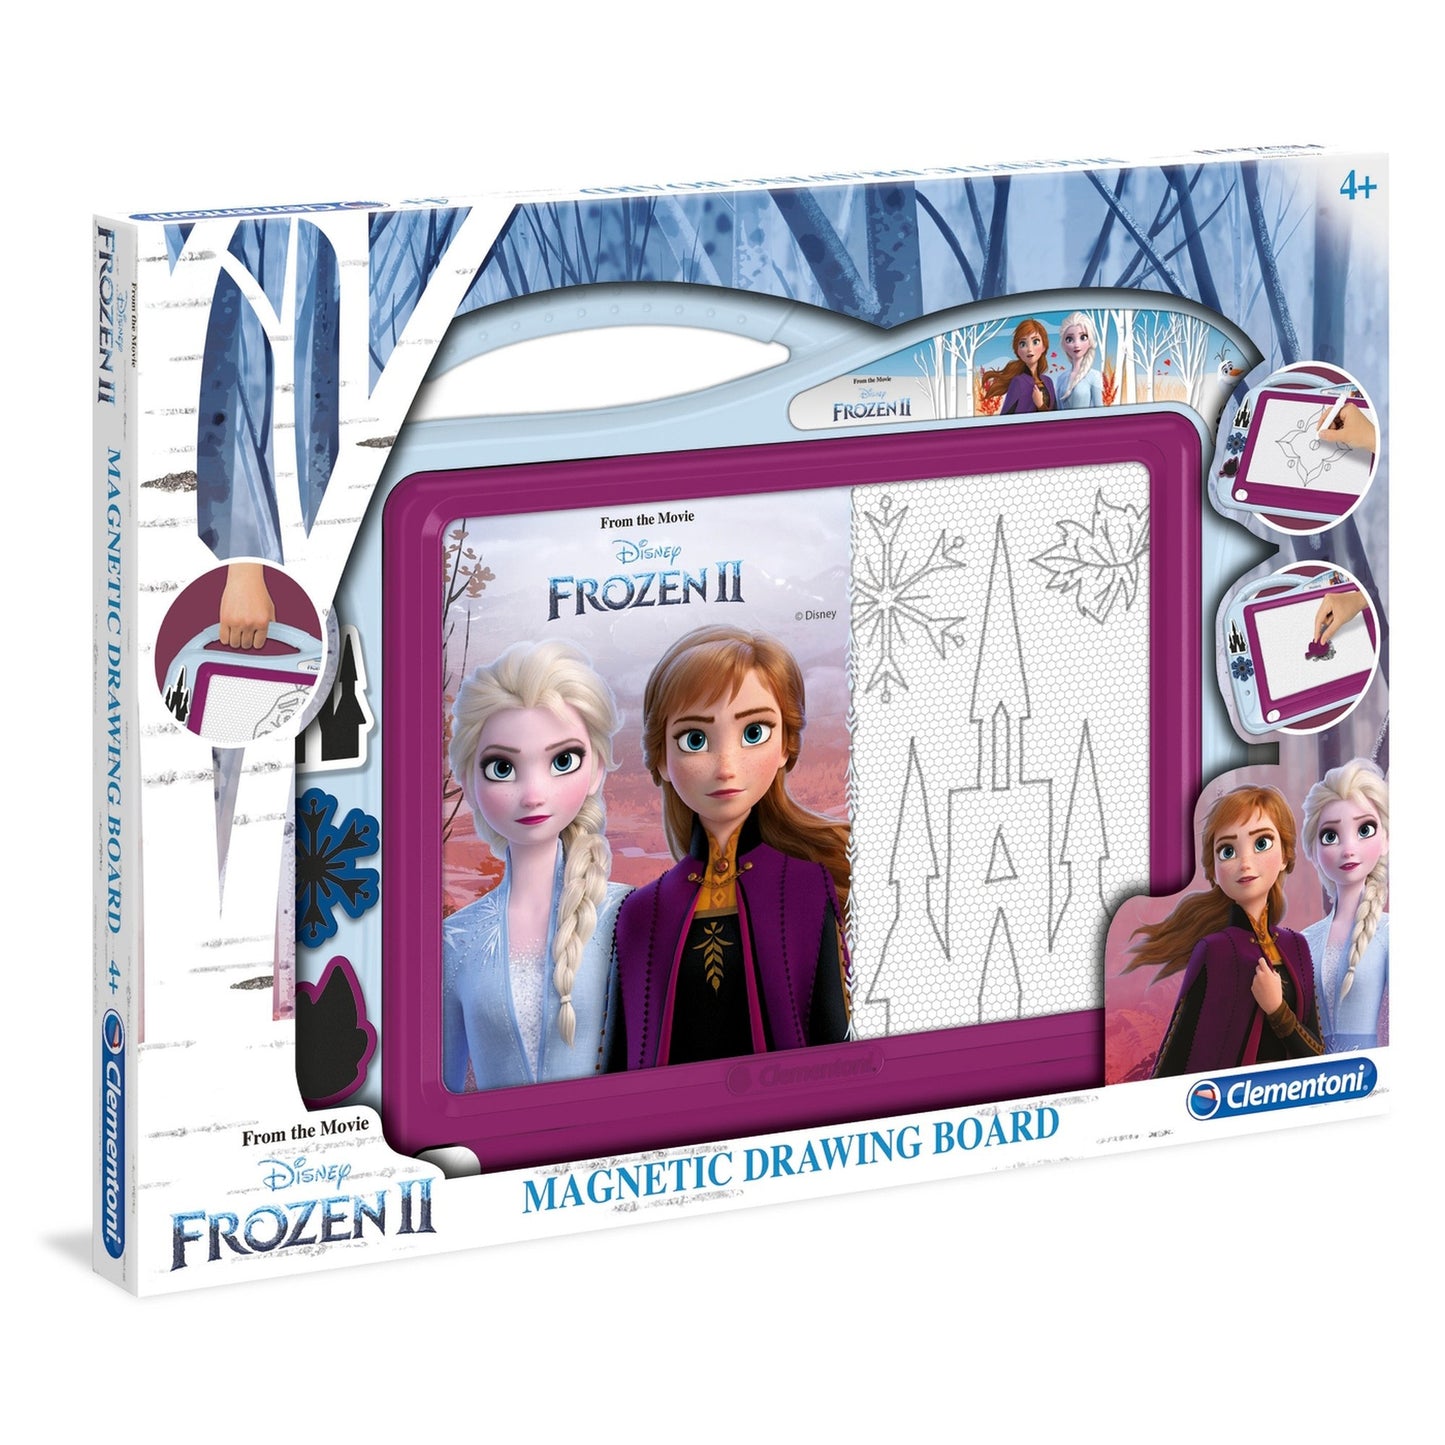 Tablita magnetica Clementoni - Disney Frozen II